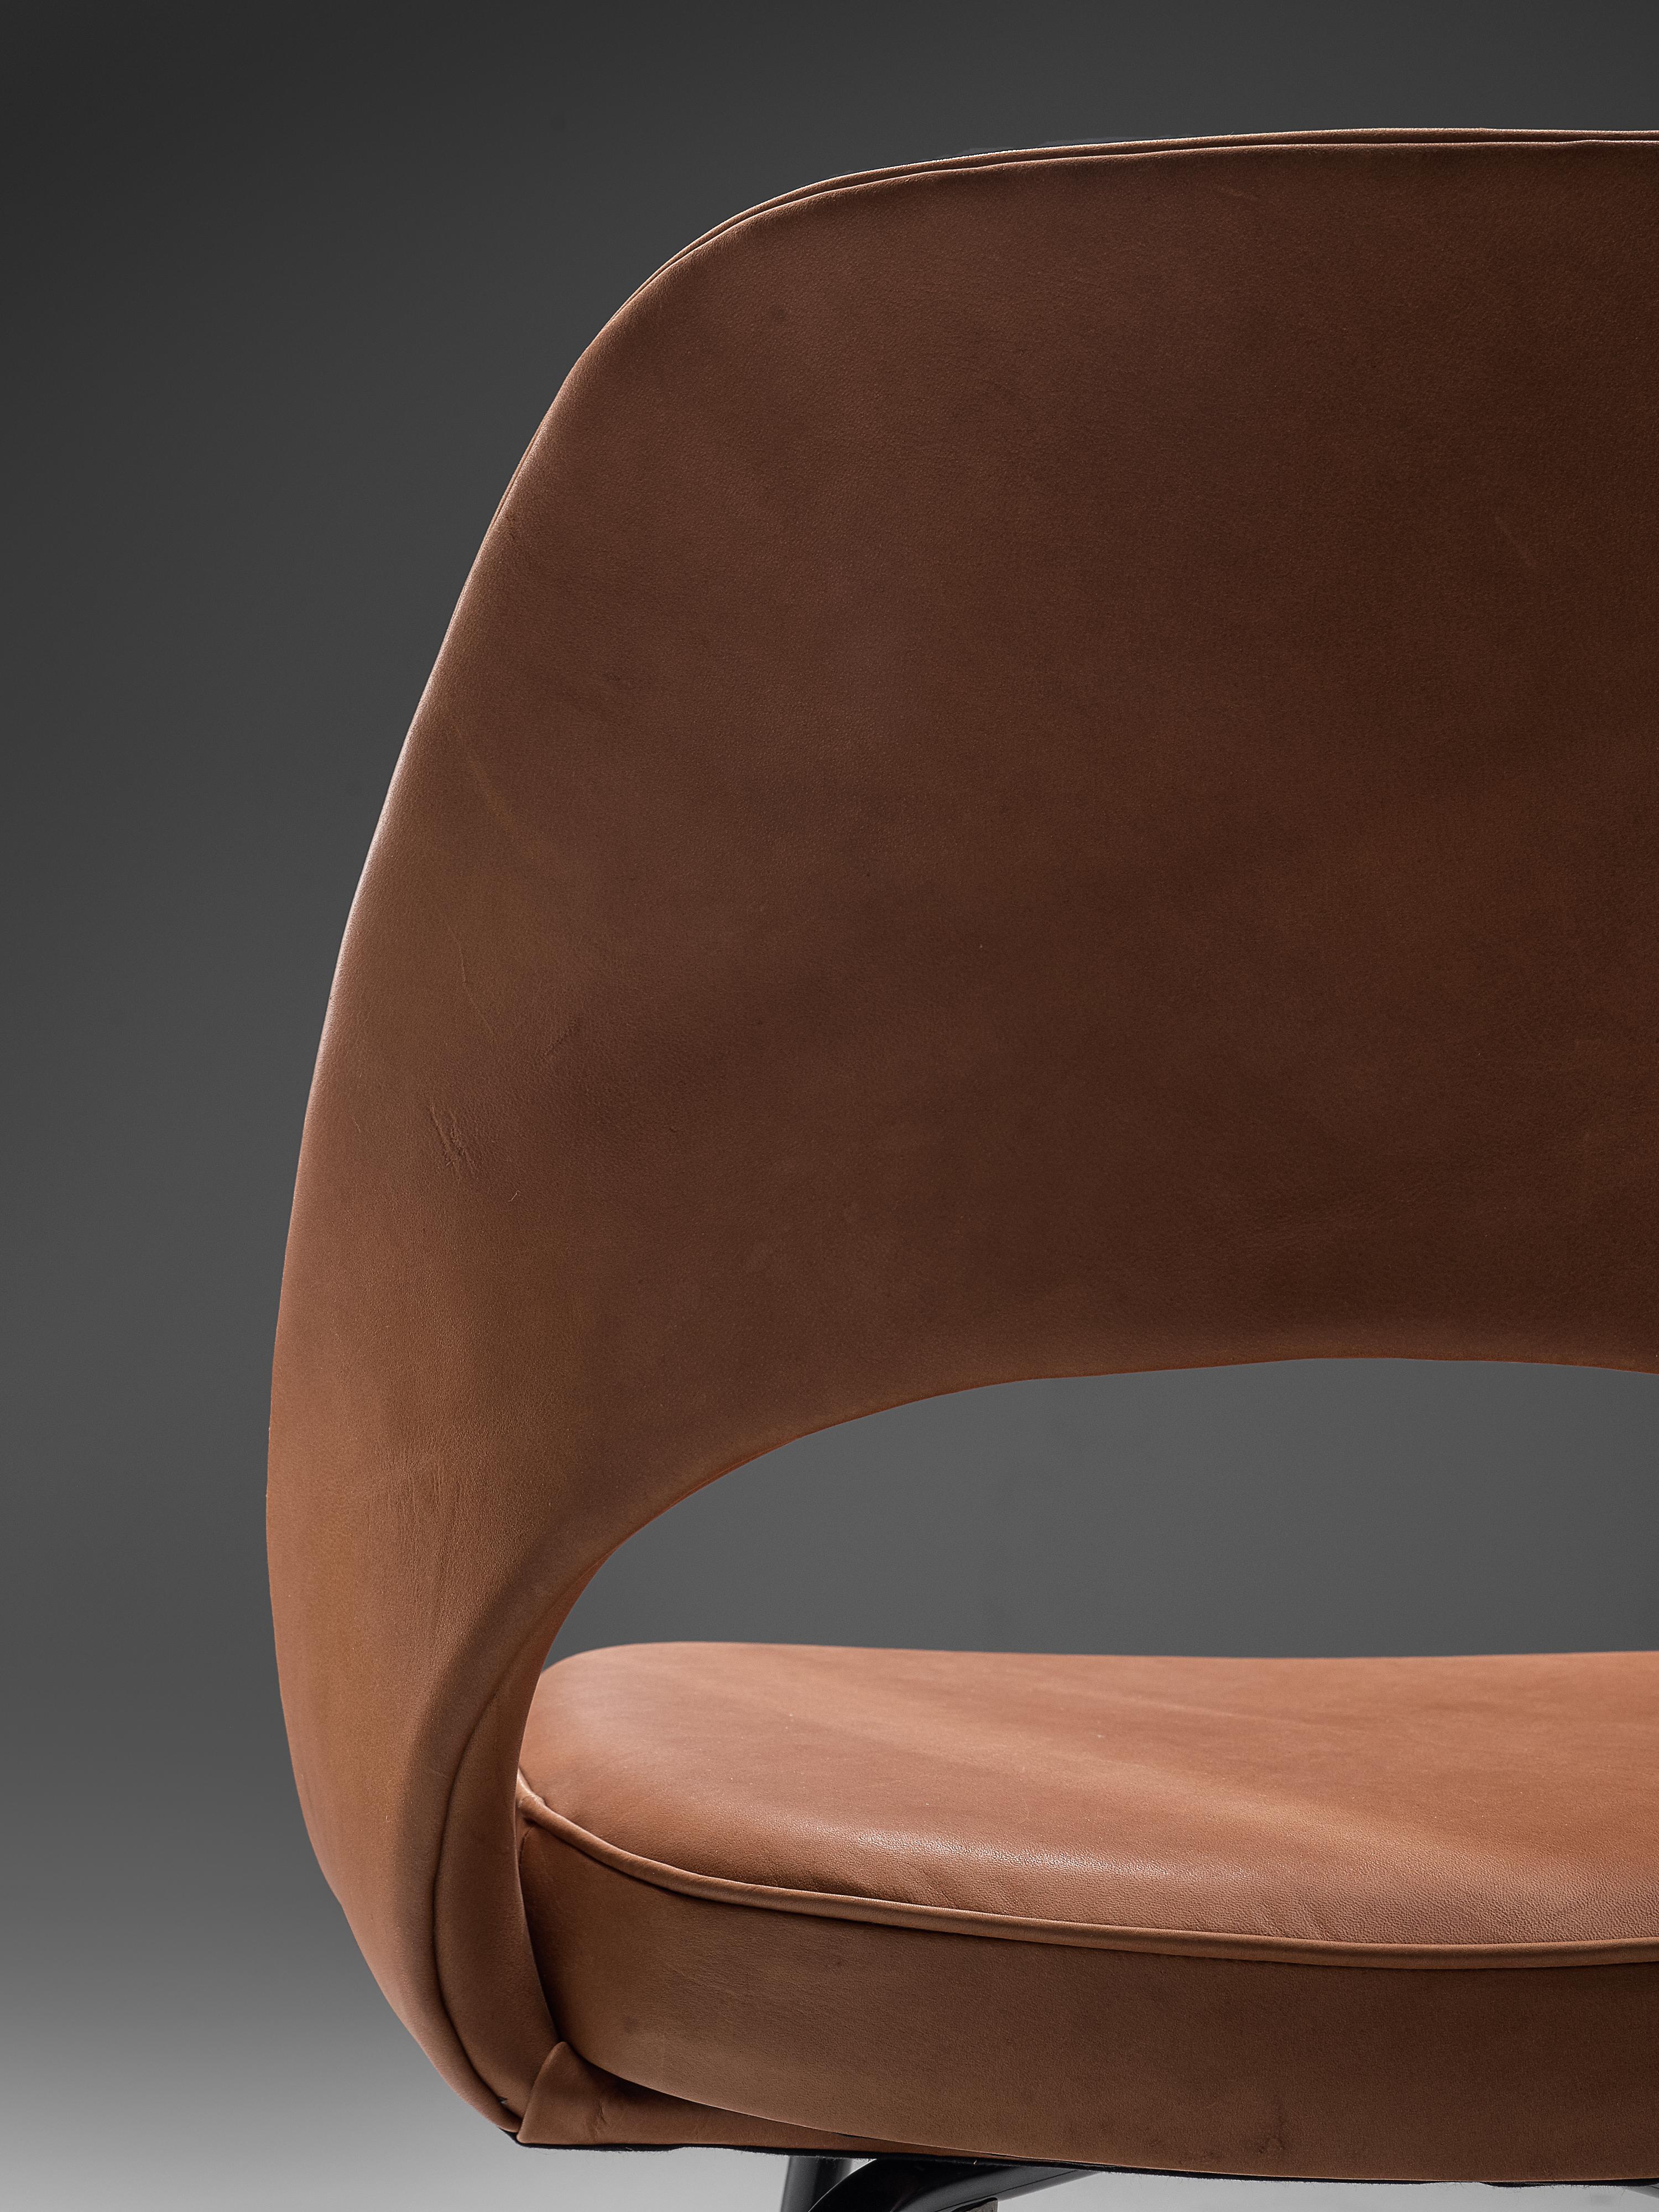 Mid-Century Modern Eero Saarinen for Knoll International Dining Chairs in Brown Leather